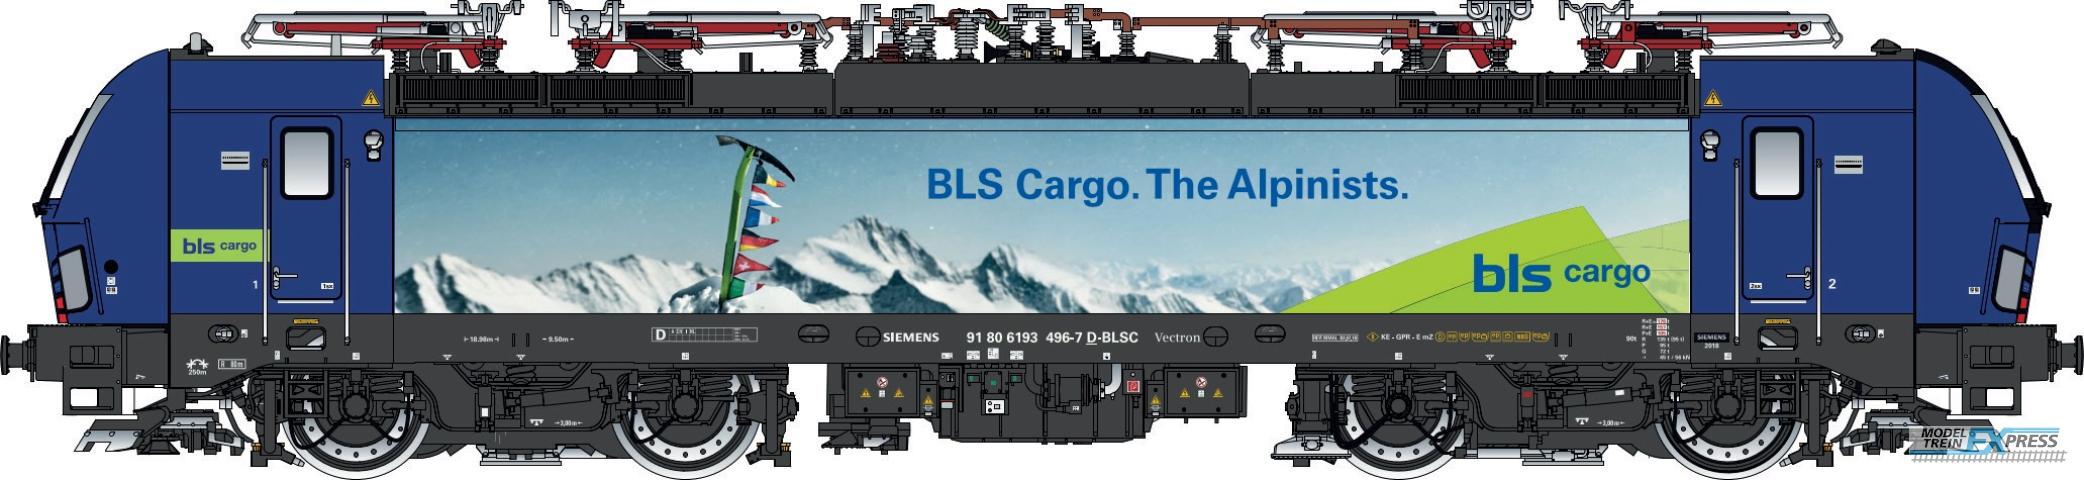 LS Models 17616 BLS Cargo/Hupac Vectron MS, 91 80 6193 496-7 D-BLSC, 4 pantographs  /  Ep. VI  /  ---  /  HO  /  AC  /  1 P.